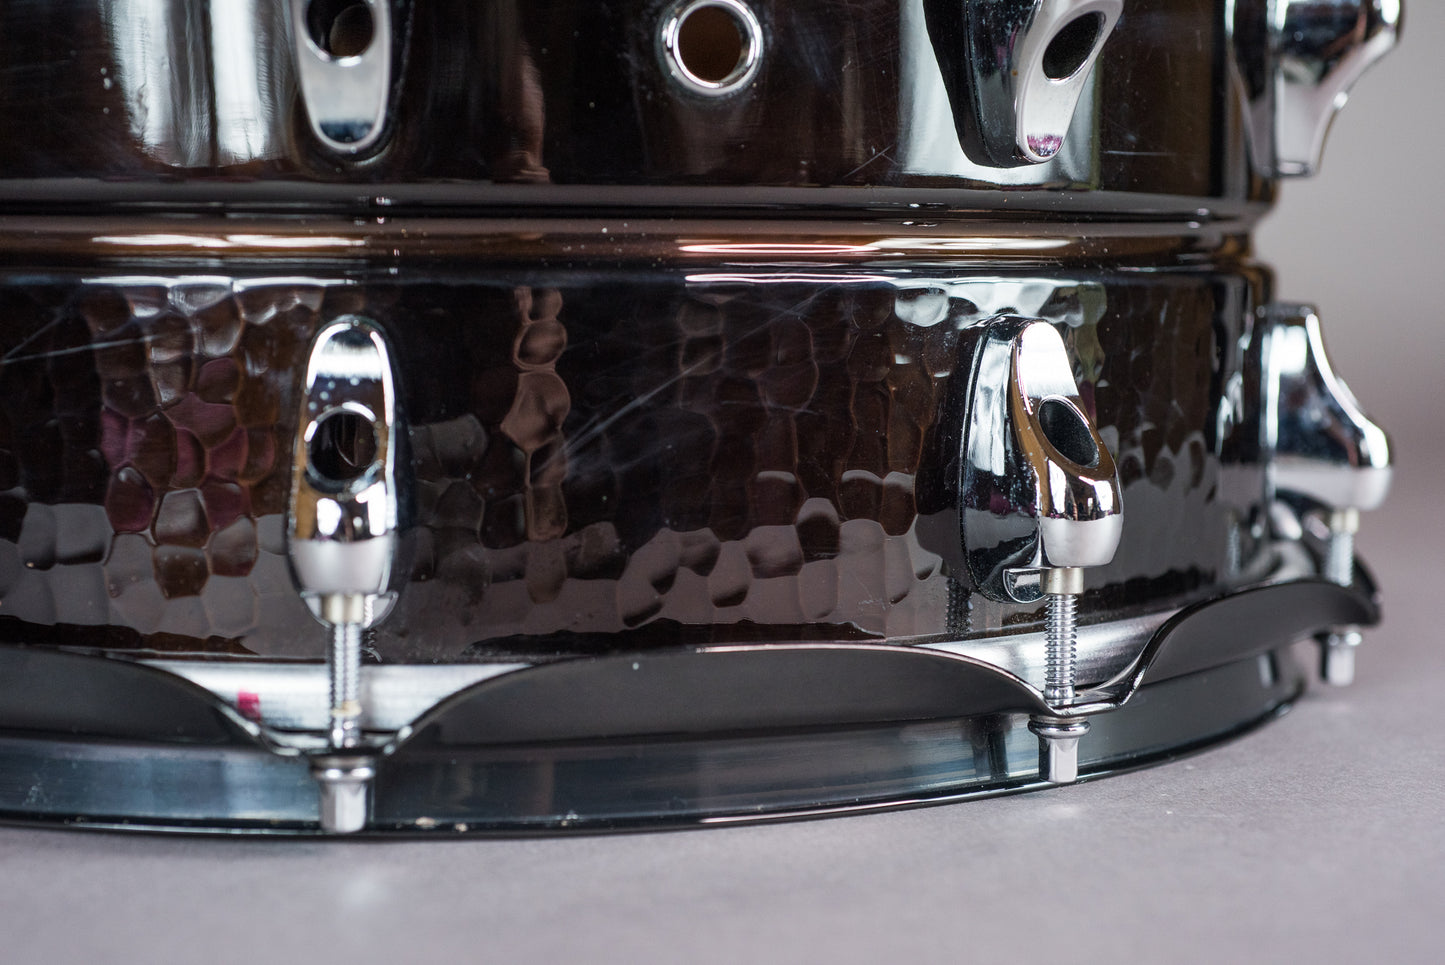 Yamaha 14” x 6.5” Mike Bordin Signature Snare Drum